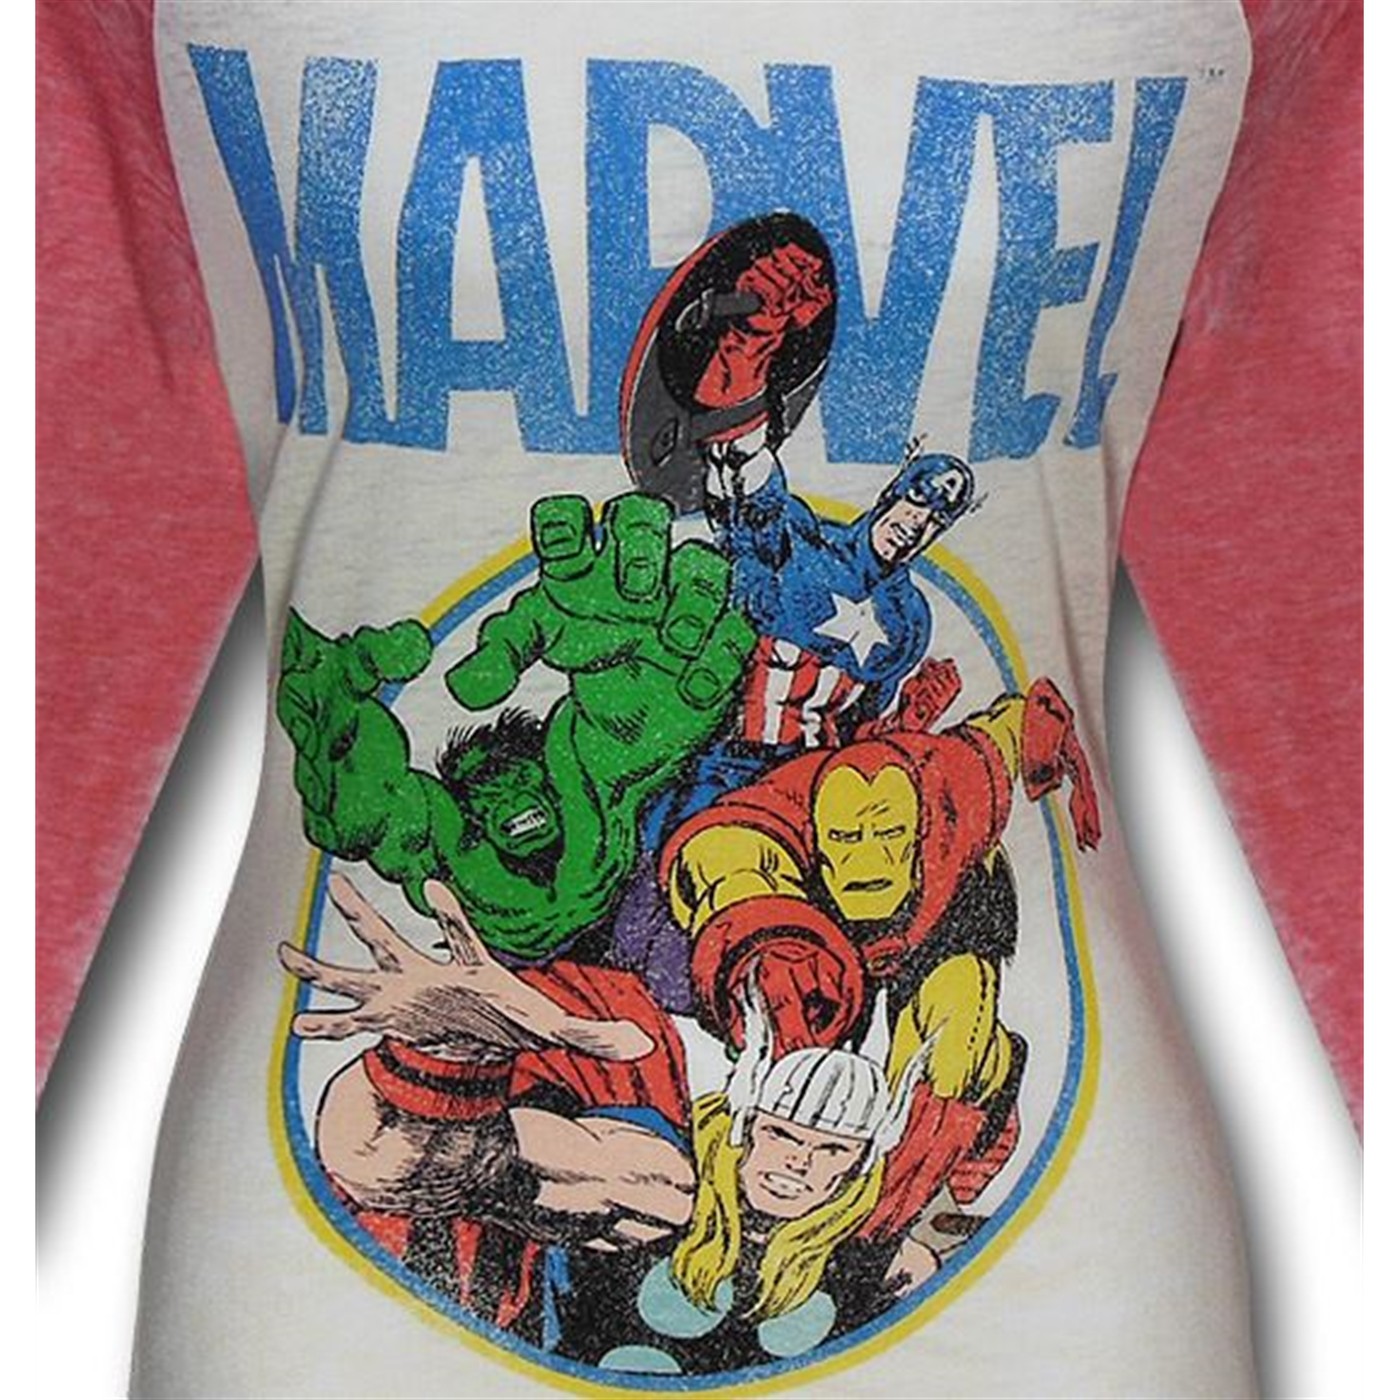 Avengers Classic Heroes Juniors Baseball T-Shirt